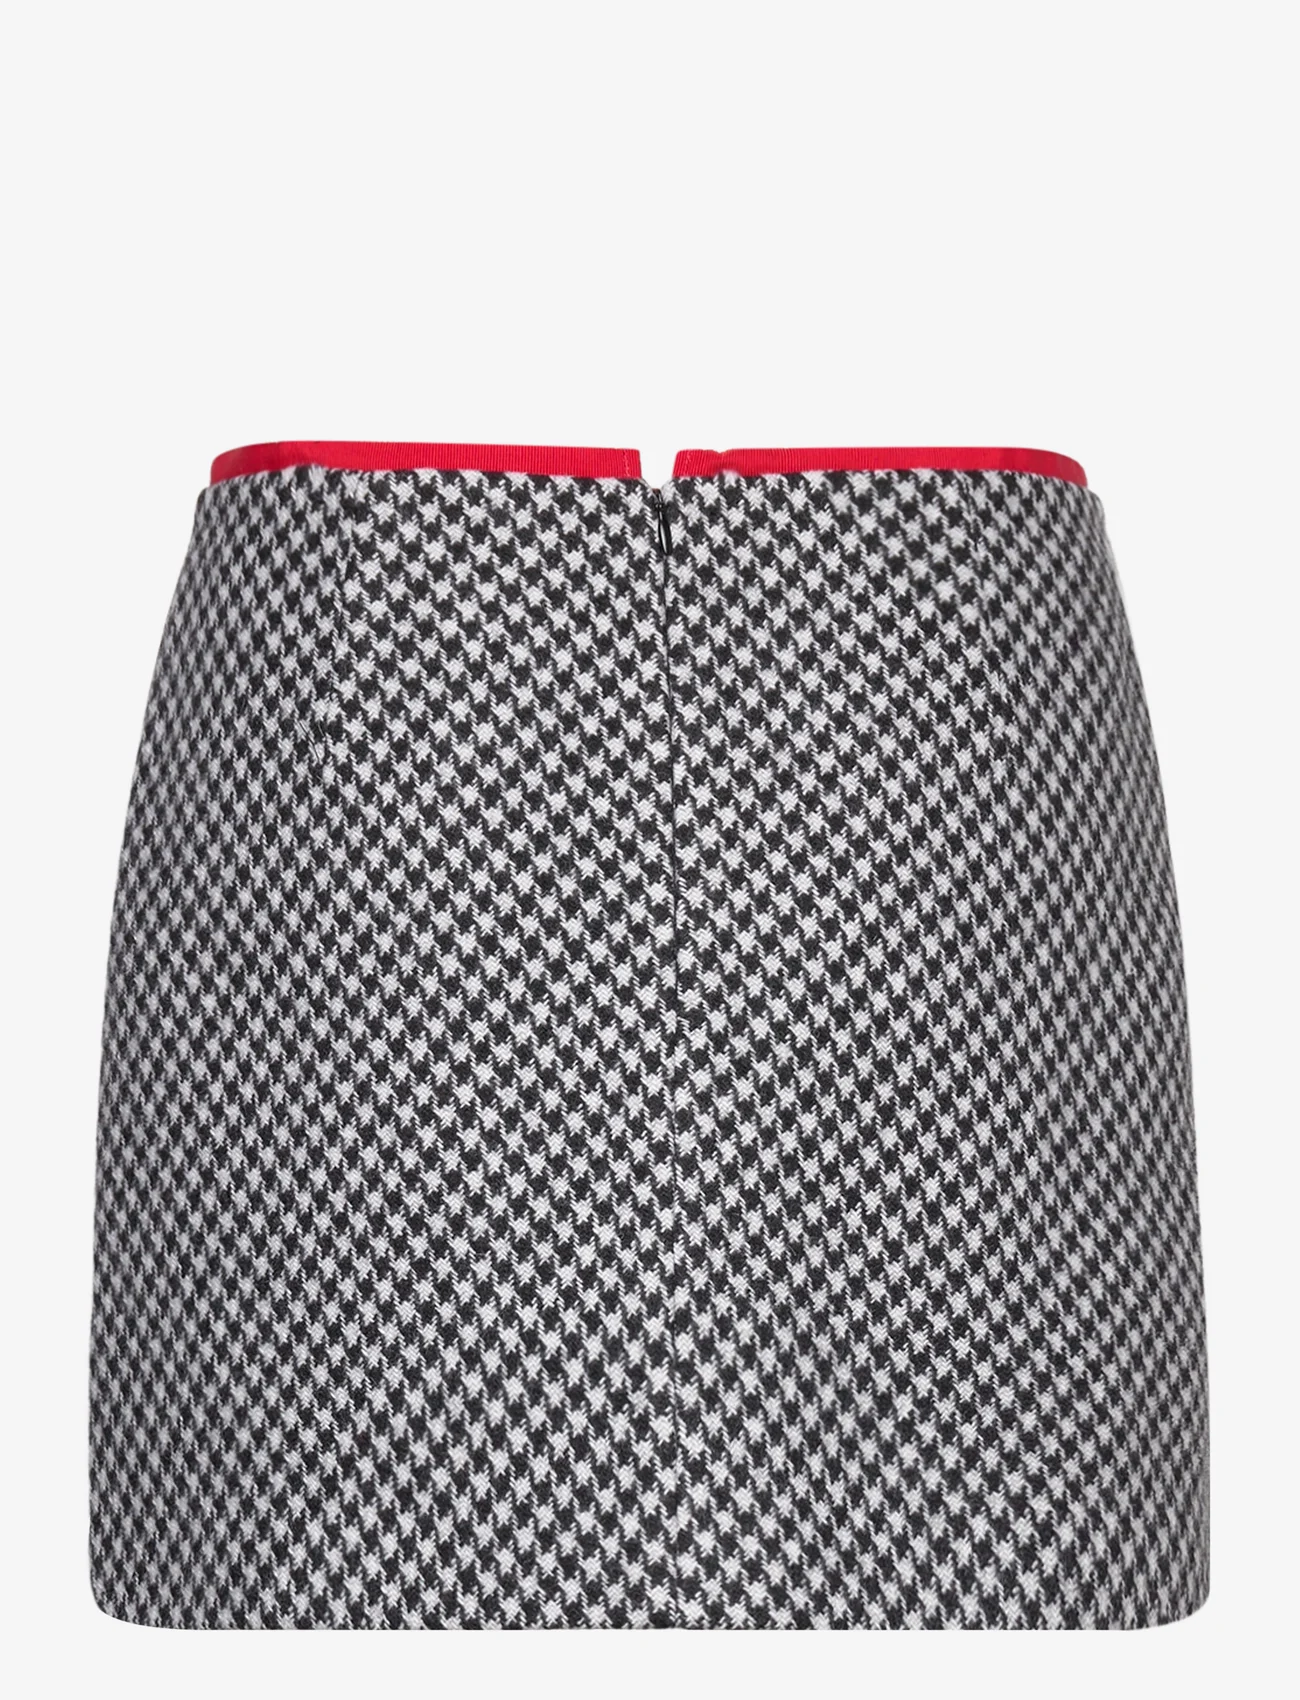 Max&Co. - VIAGGIO - korte nederdele - black pattern - 1